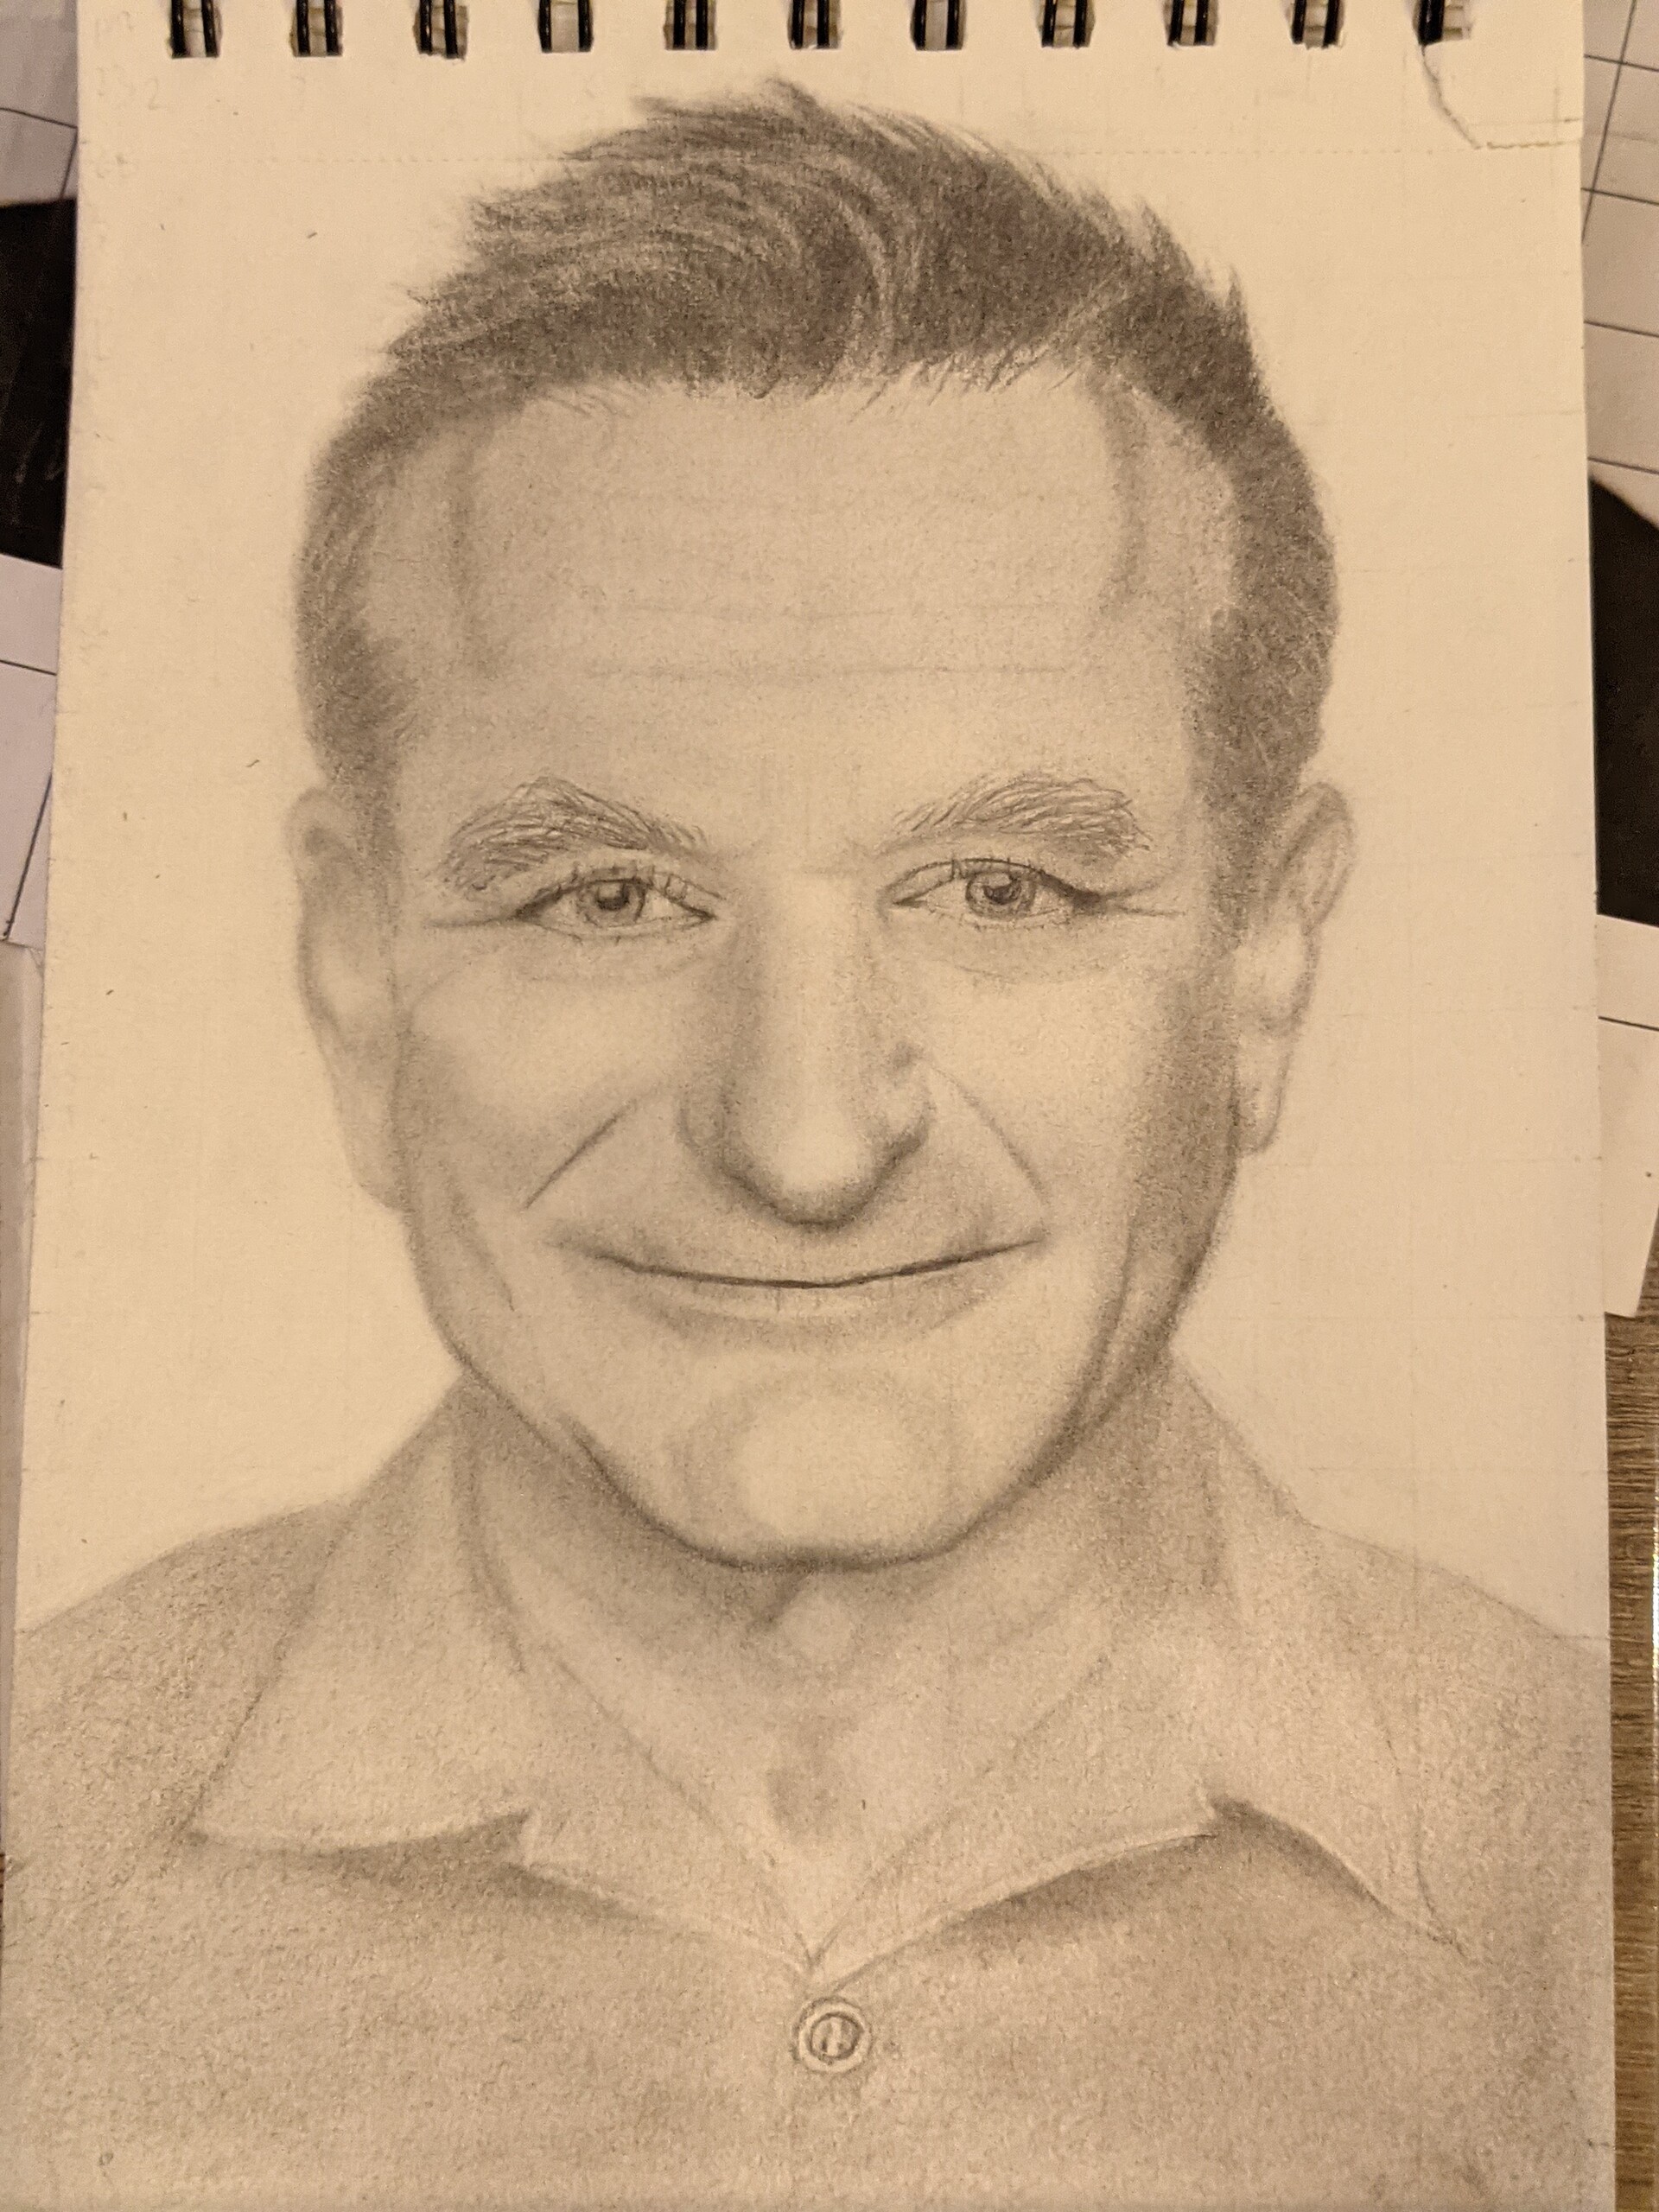 ArtStation - Portrait of Robin Williams